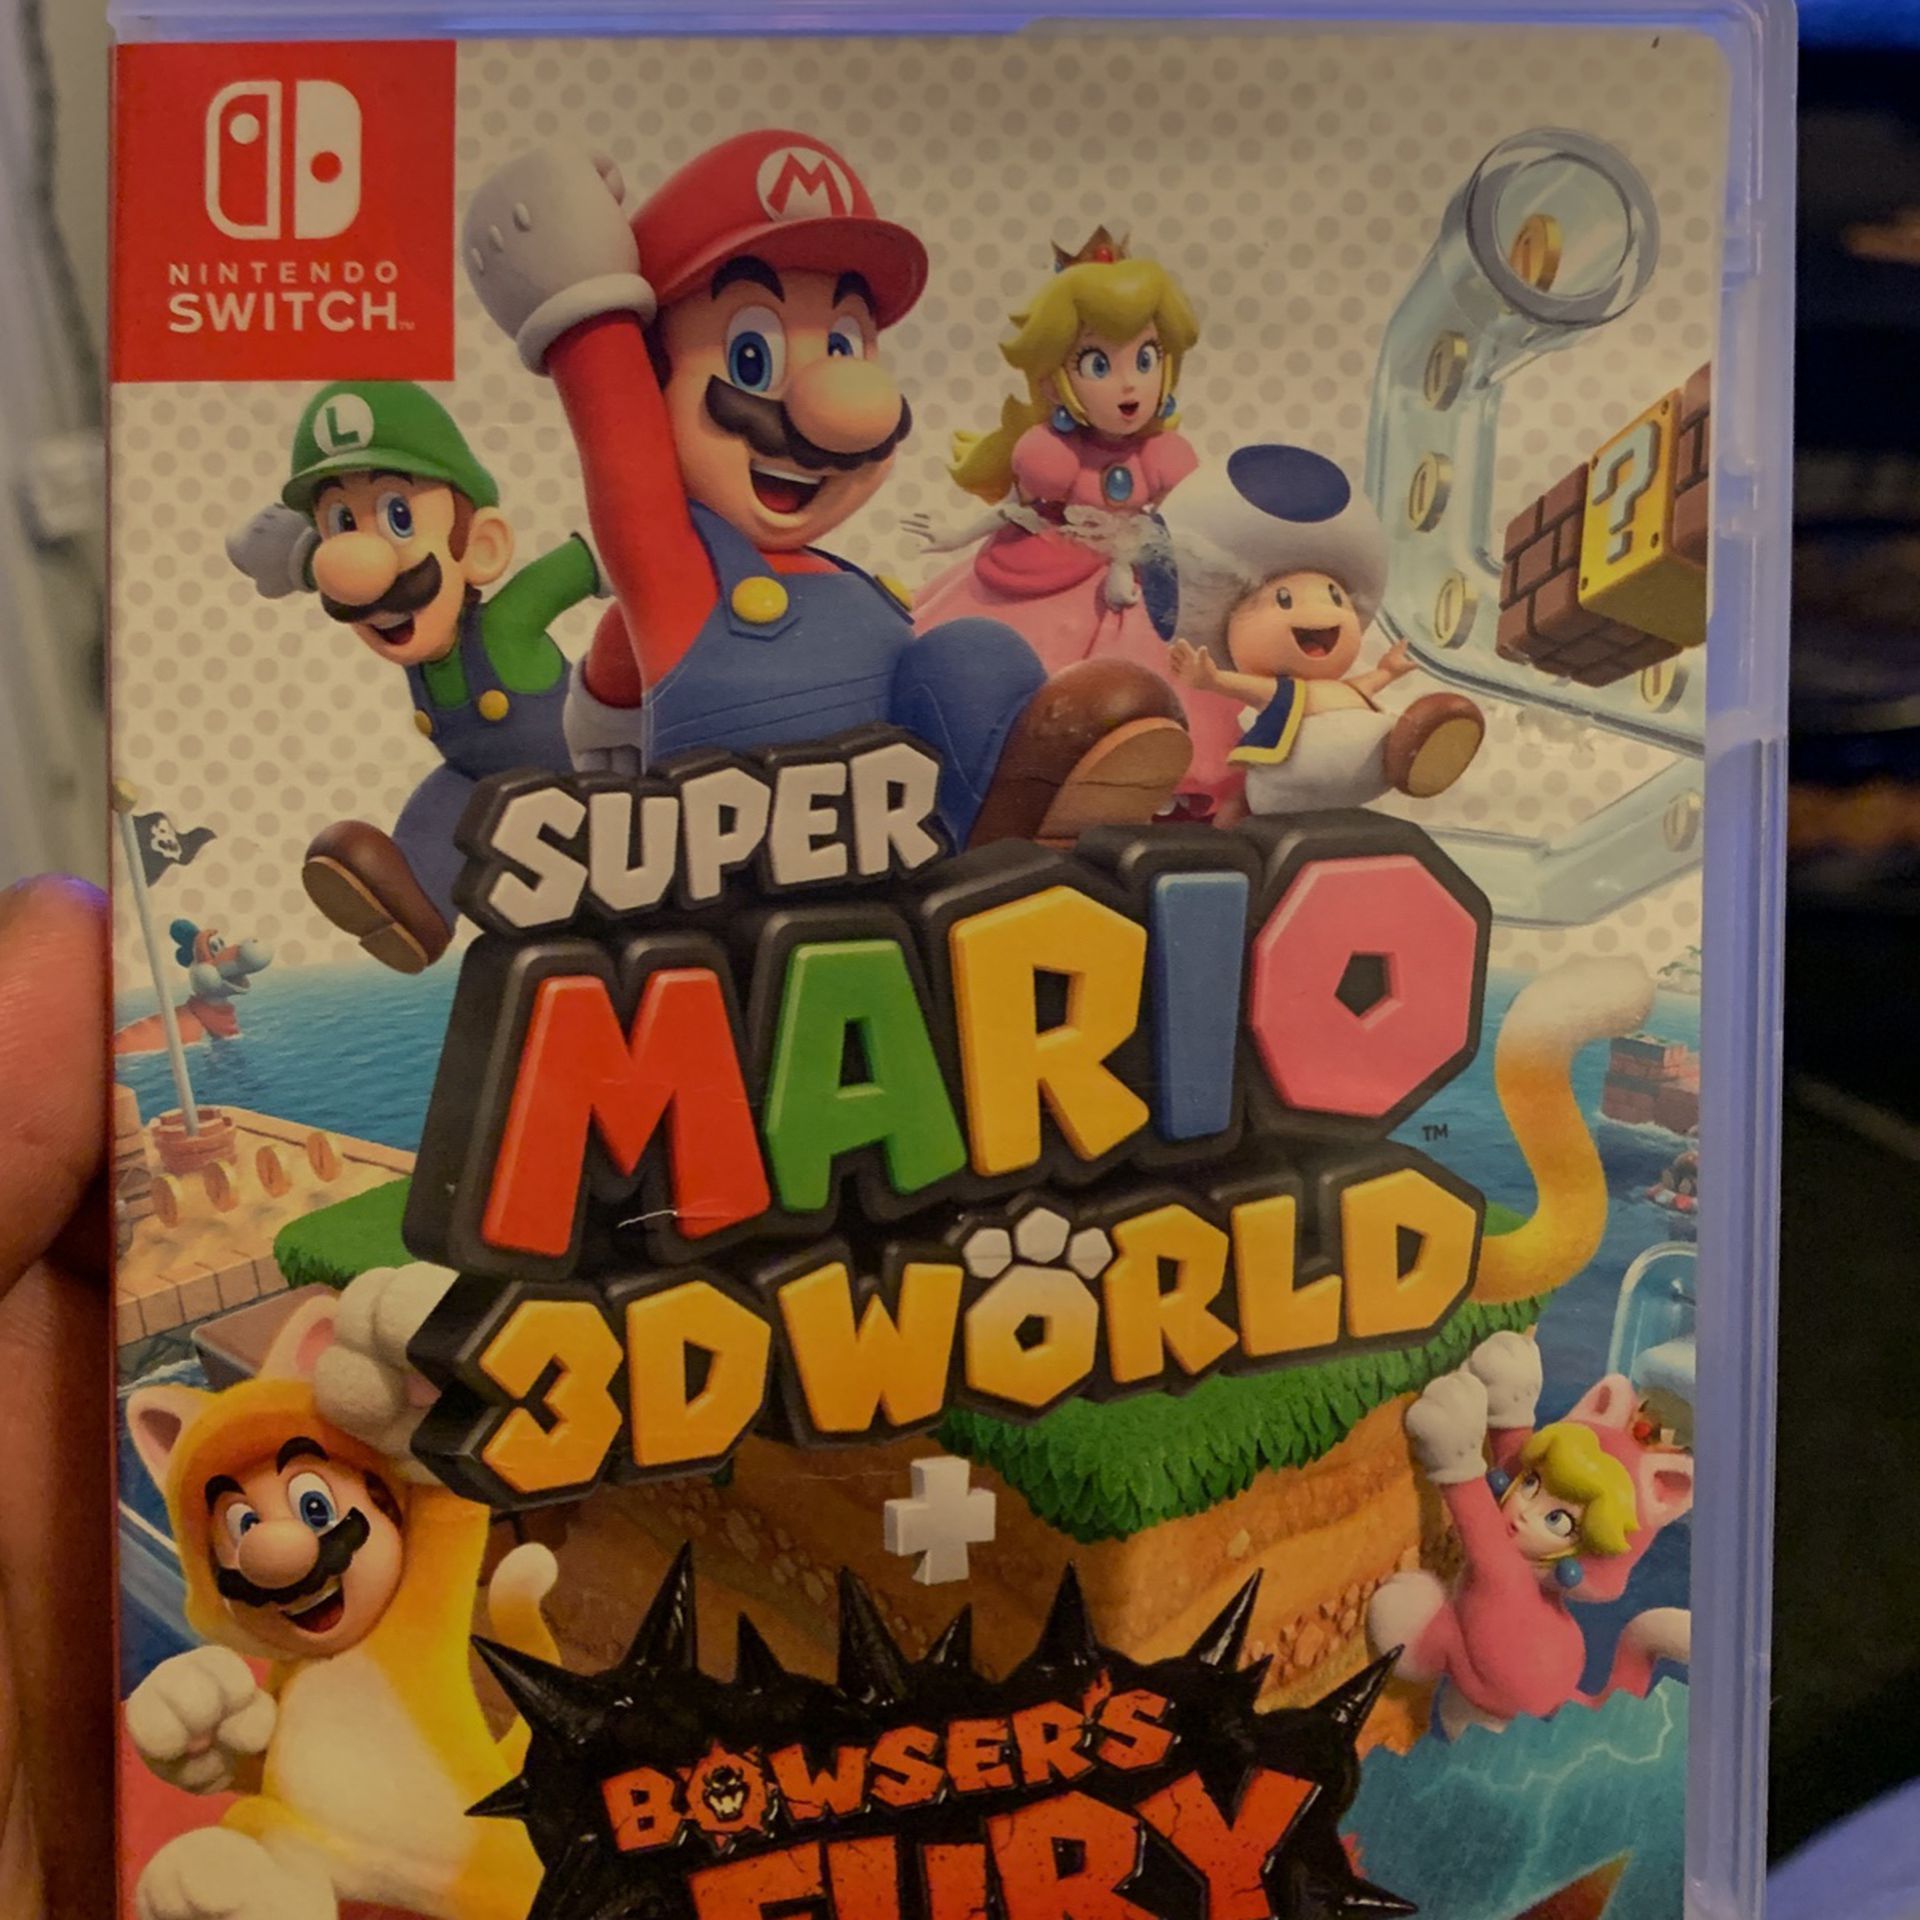 Super Mario 3D World + Bowsers Fury 